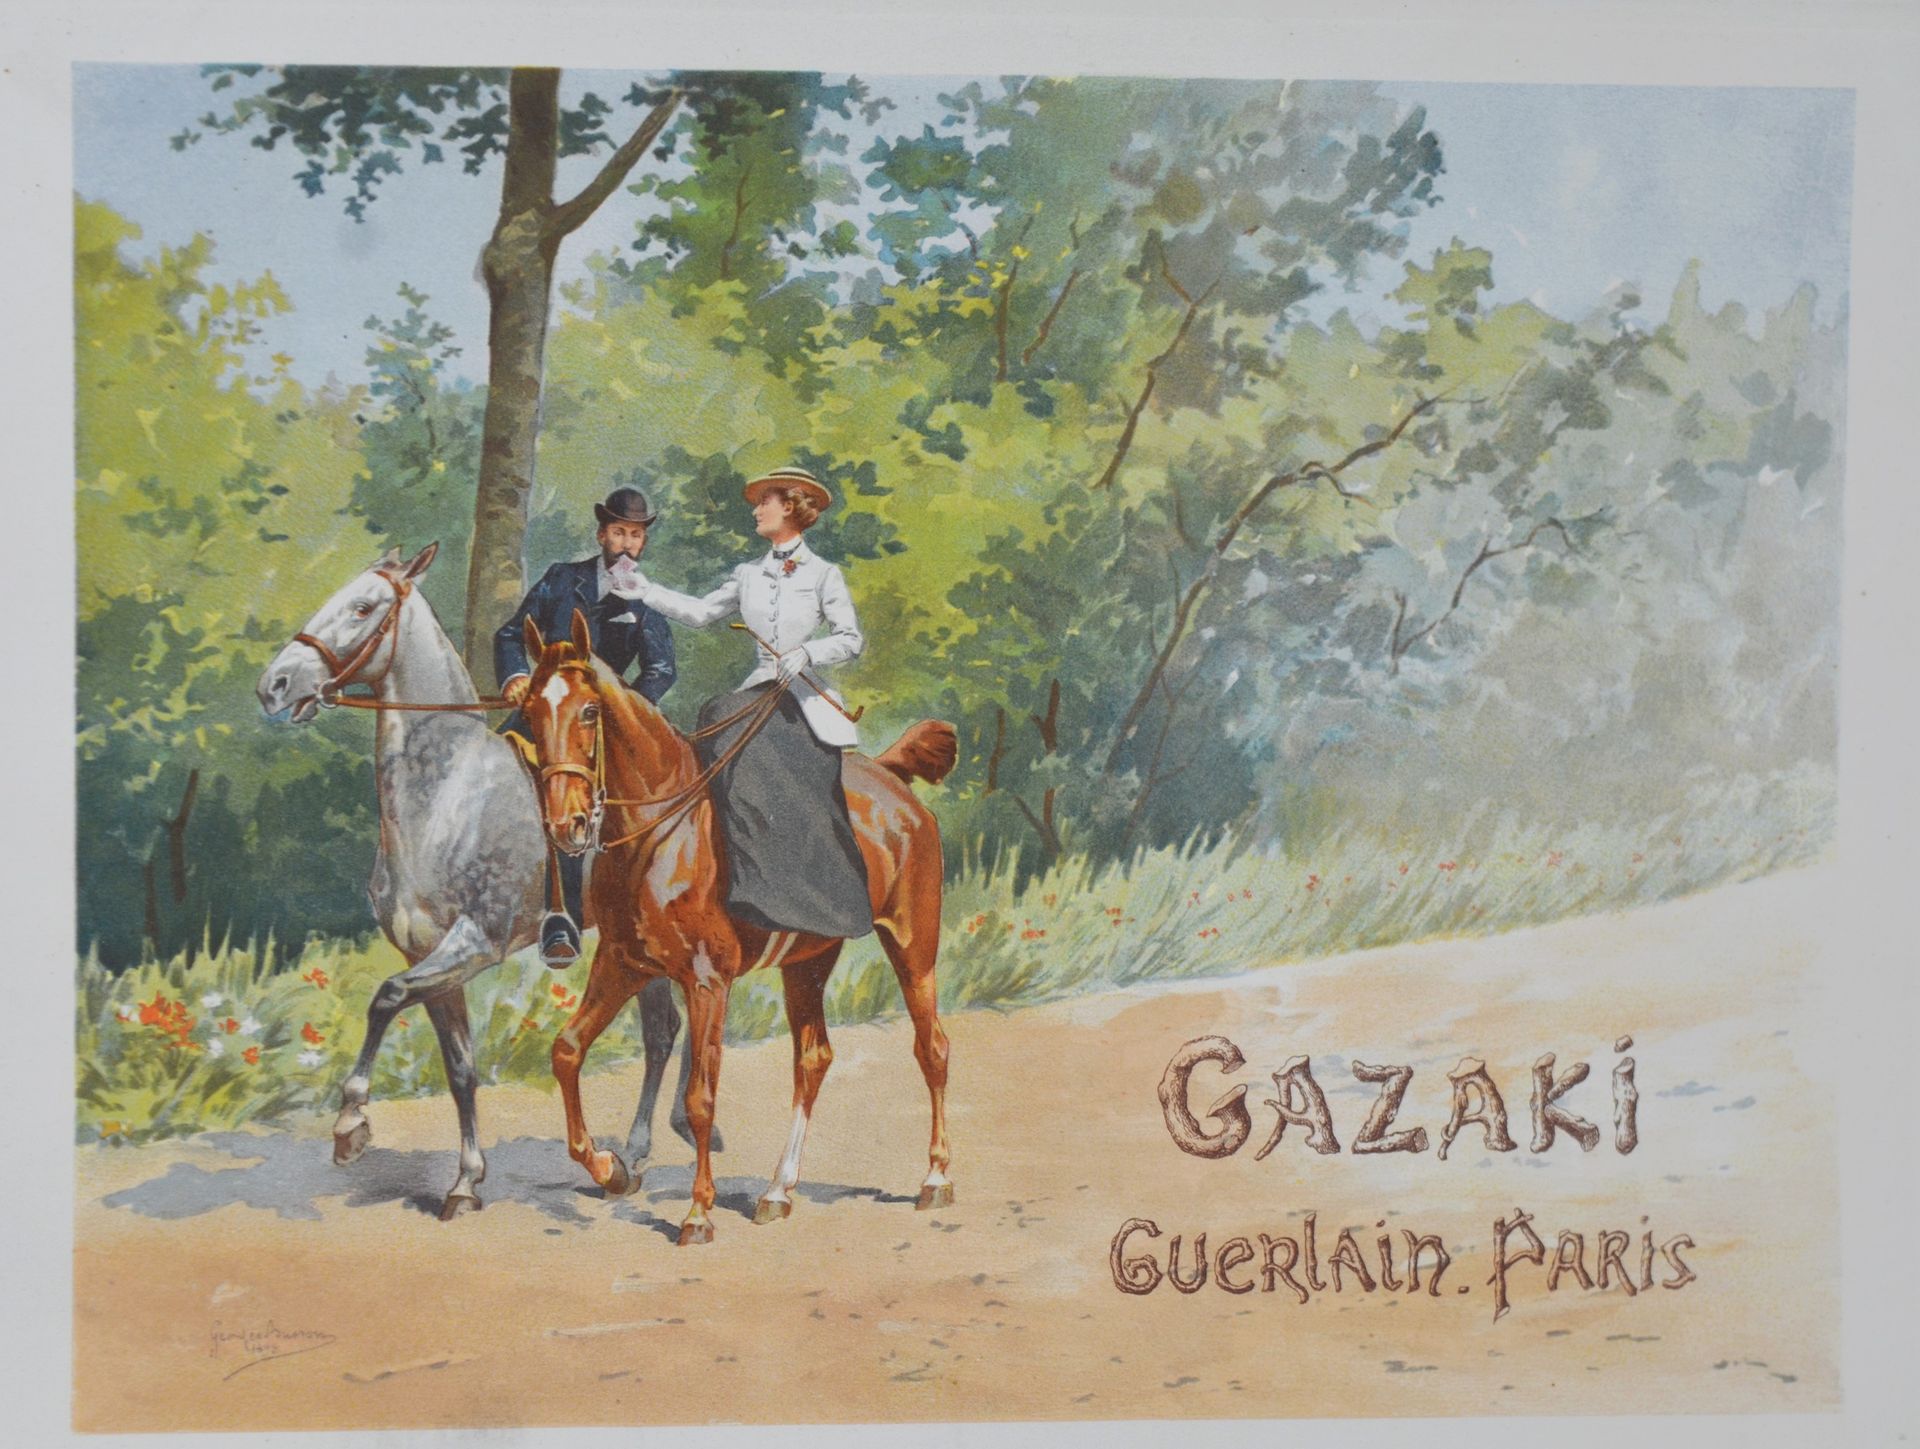 Null 古埃林 "加扎基

罕见的纸板广告，第一时期，有装饰，标题为 "Gazaki Guerlain Paris"。

尺寸为45 x 63厘米。